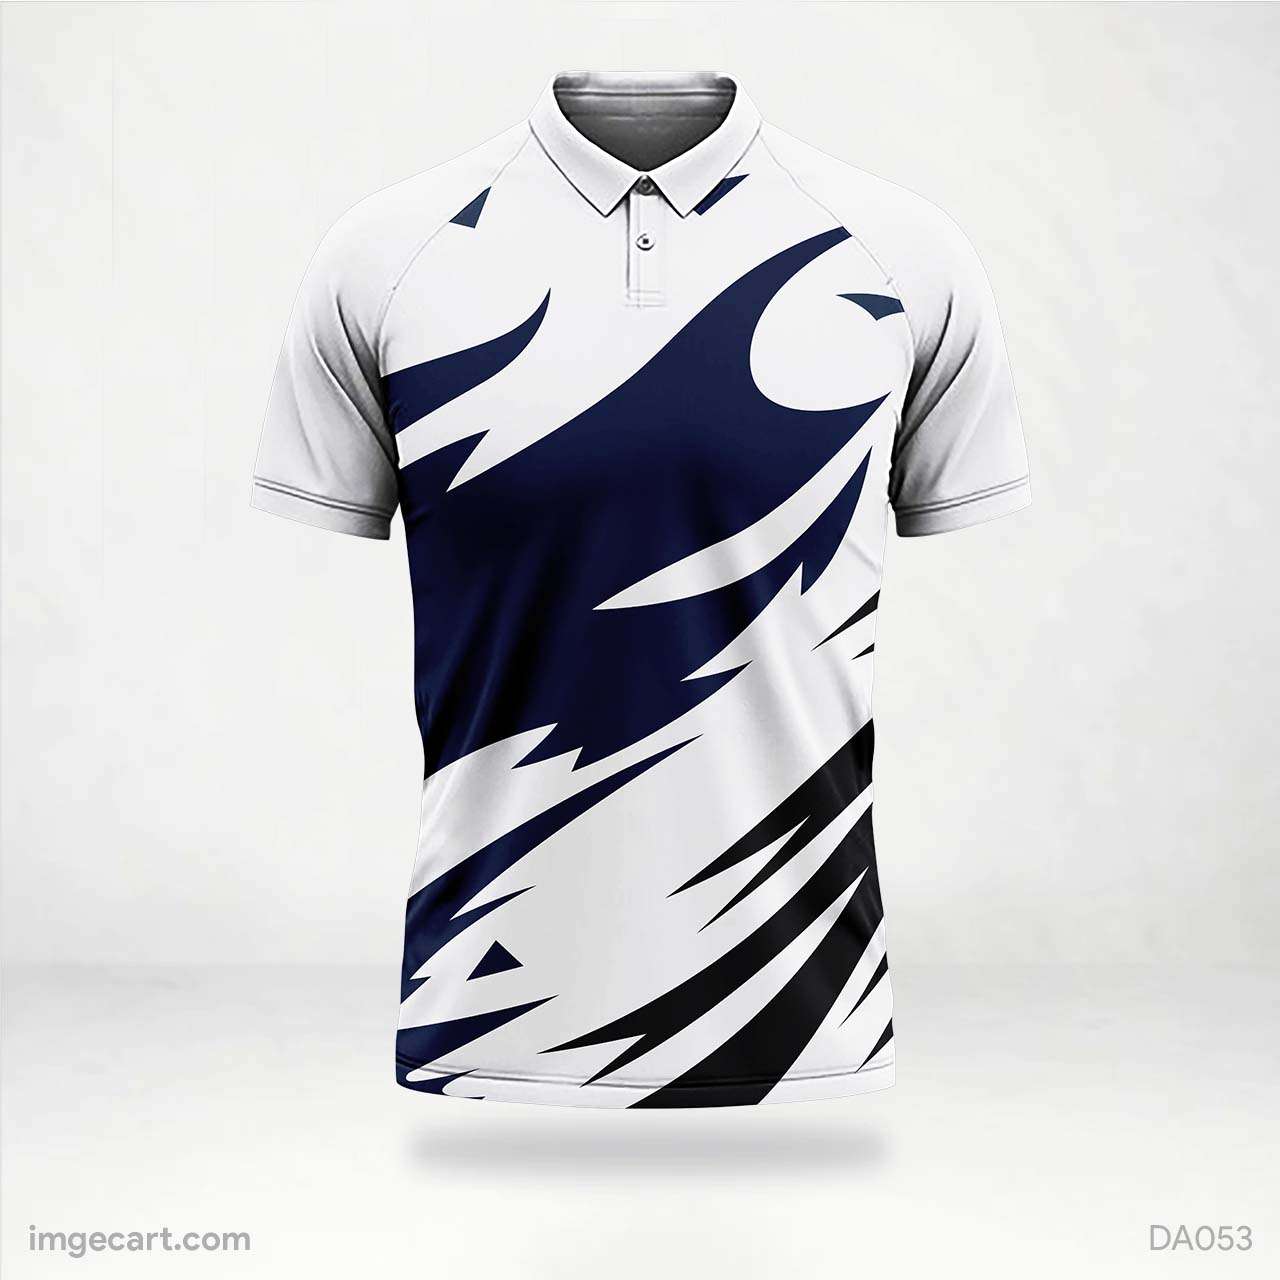 Cricket Jersey Design Blue with Pattern - imgecart